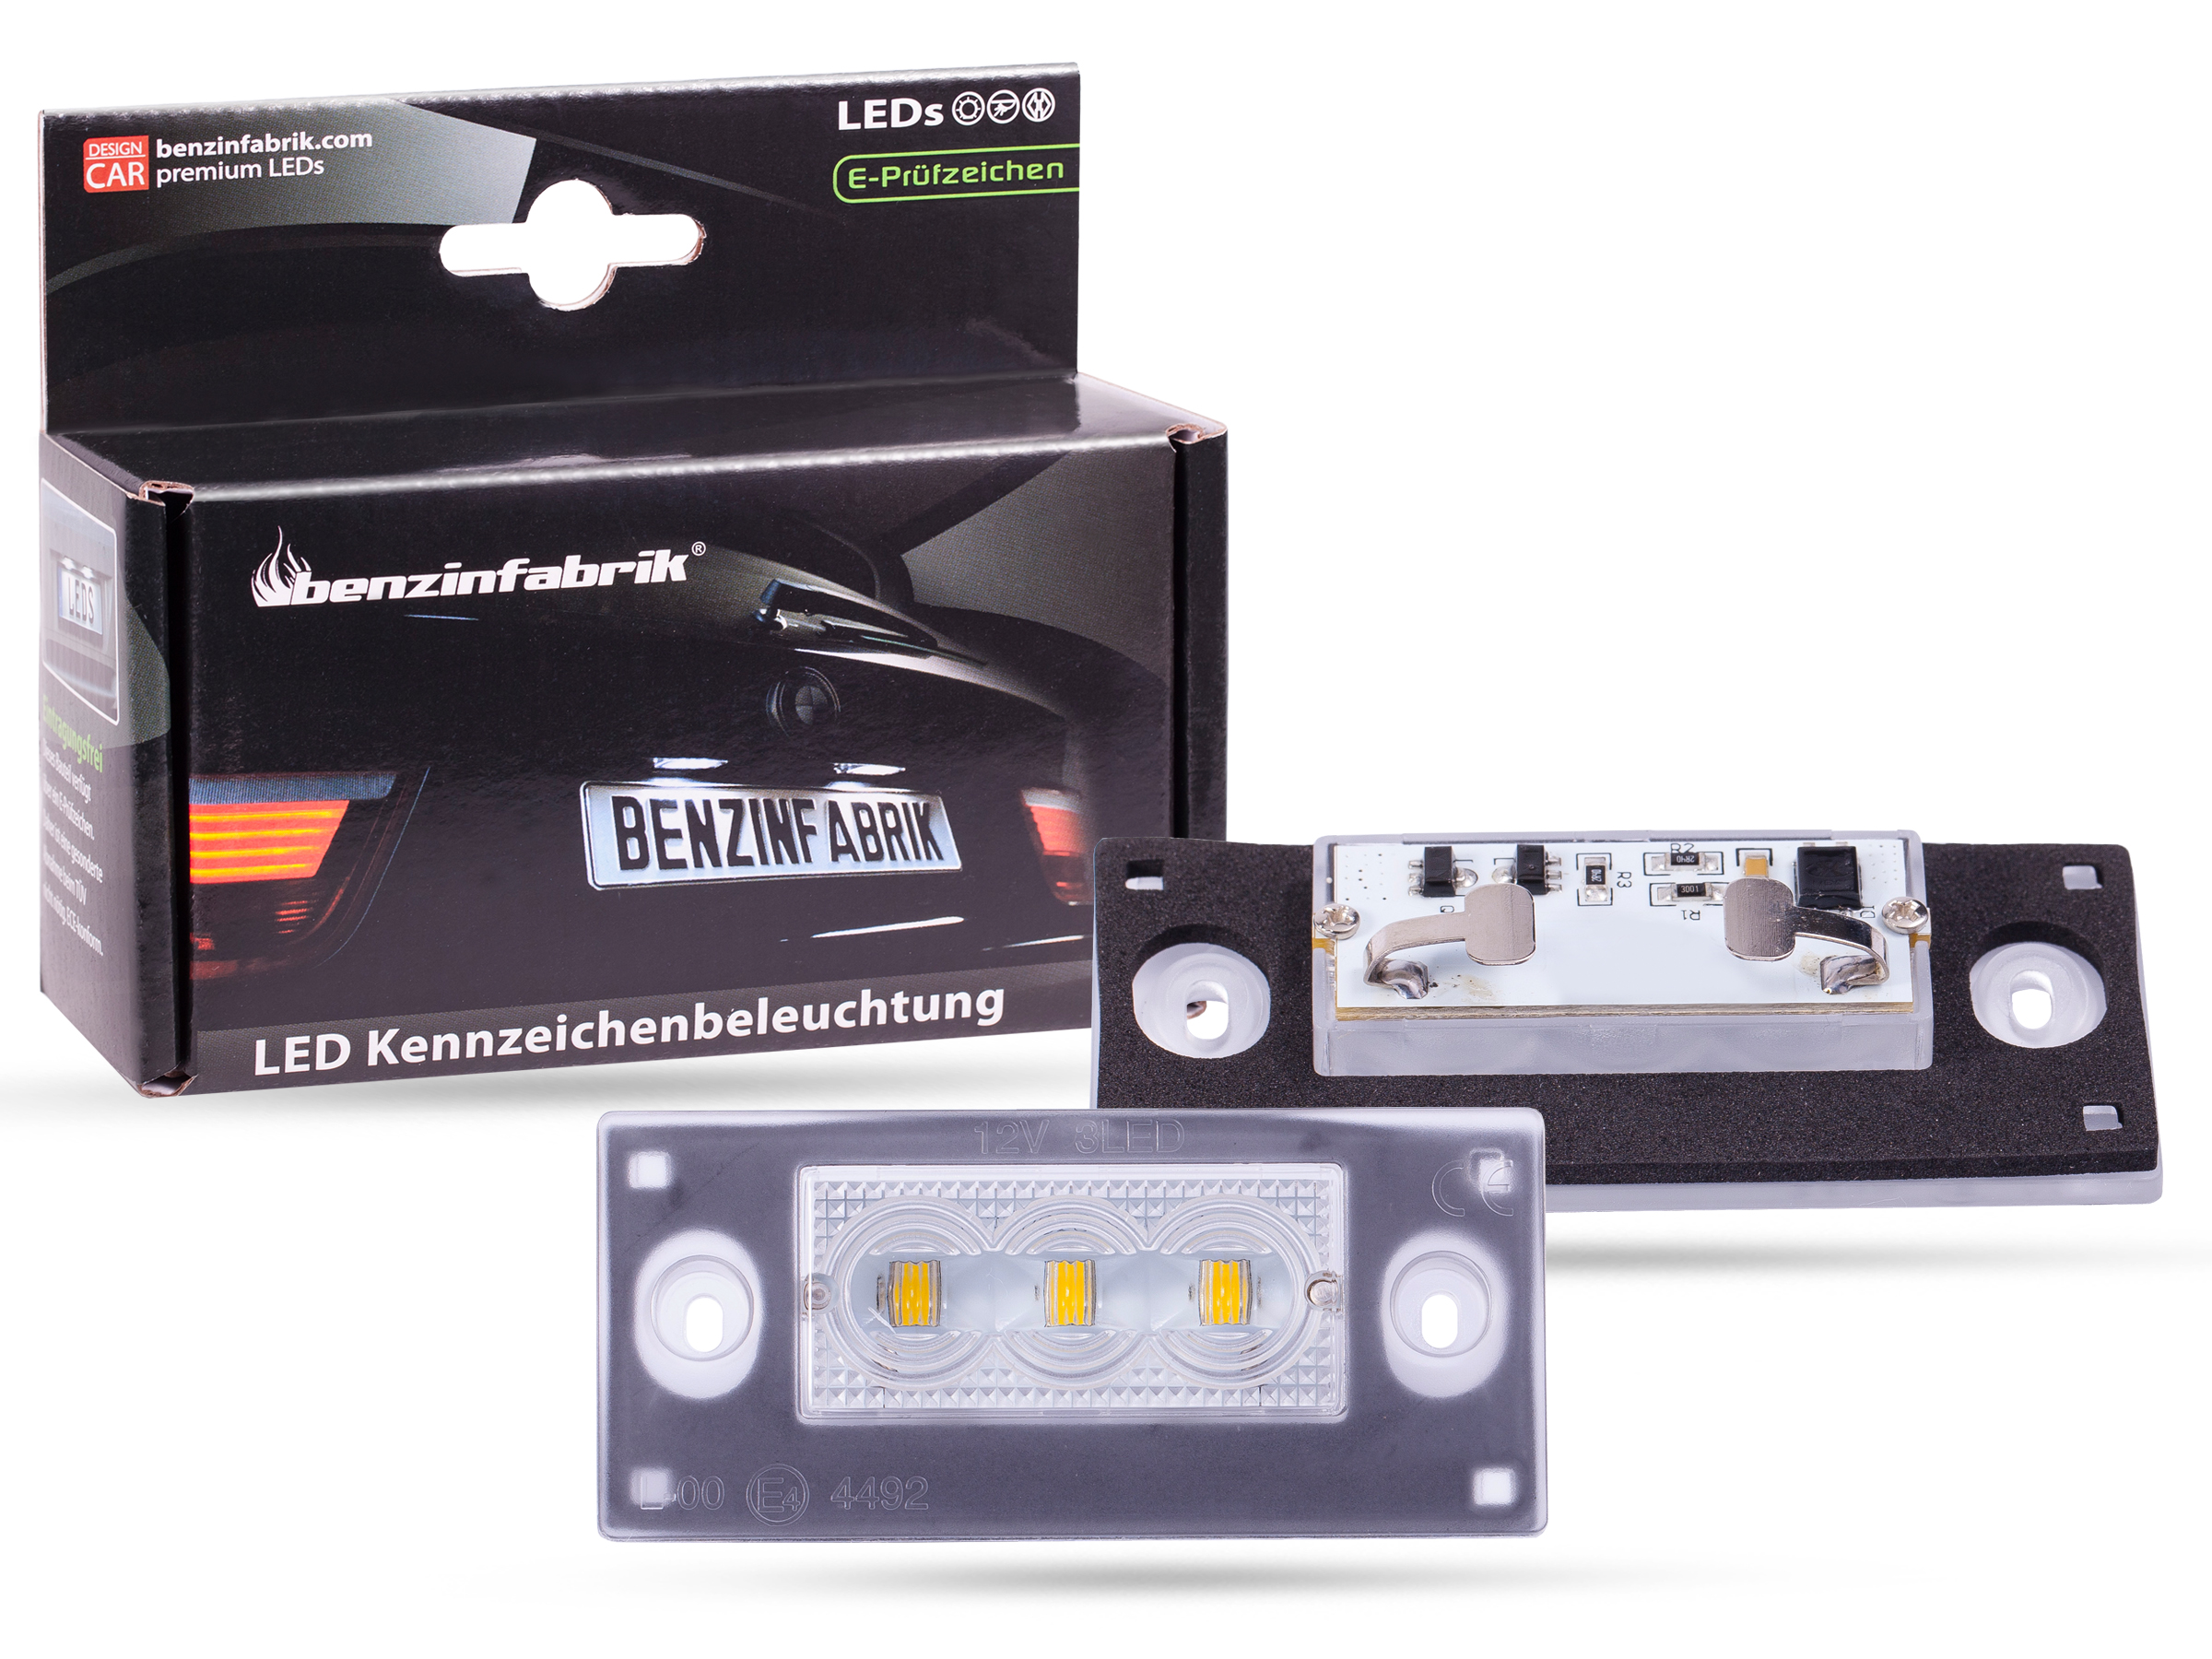 LED Kennzeichenbeleuchtung Module Audi A3 8L, mit E-Prüfzeichen